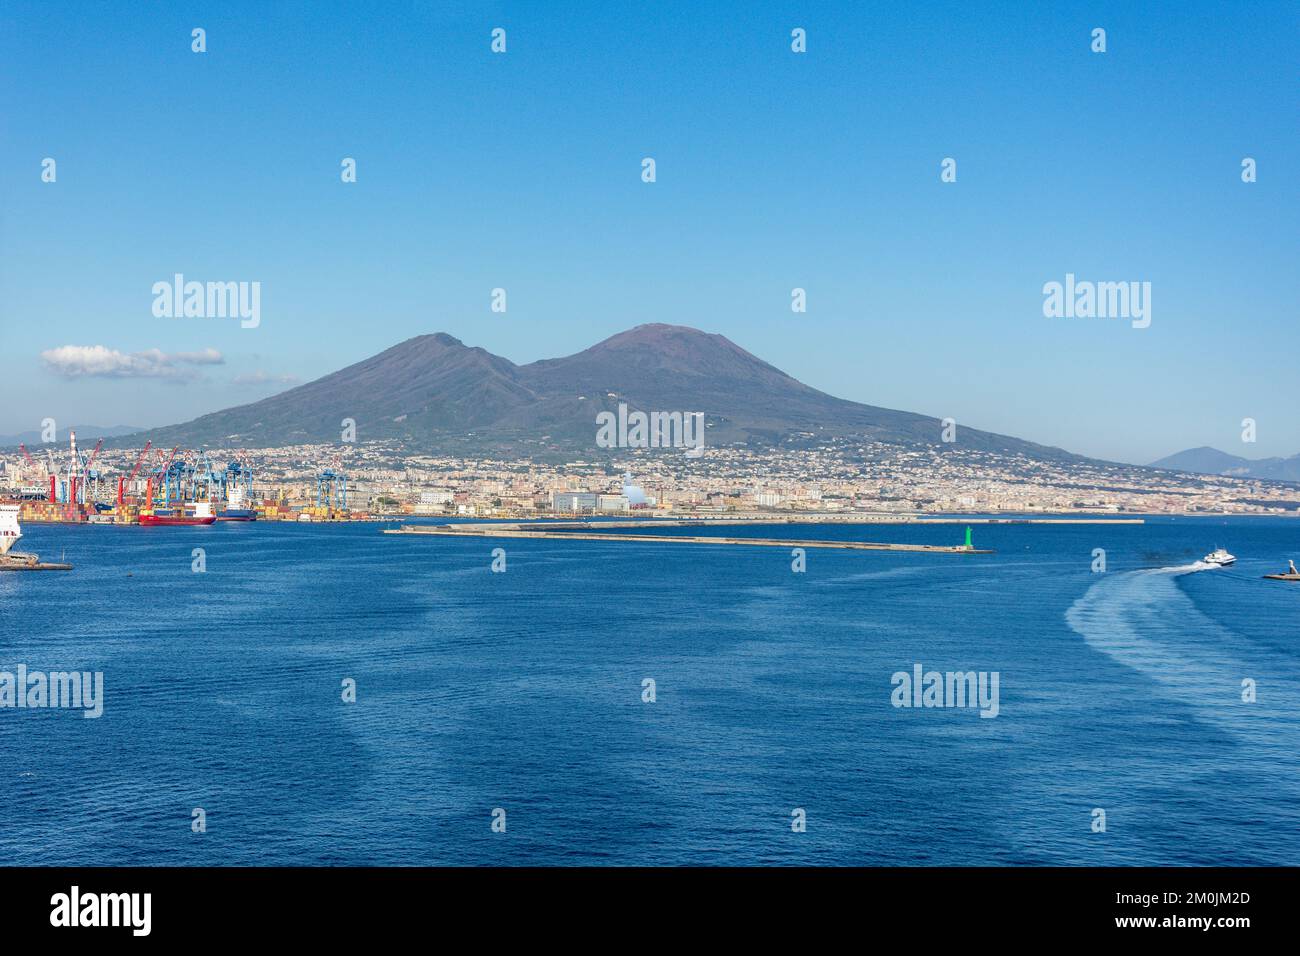 Mount Vesuvius from Bay of Naples, City of Naples (Napoli), Campania Region, Italy Stock Photo